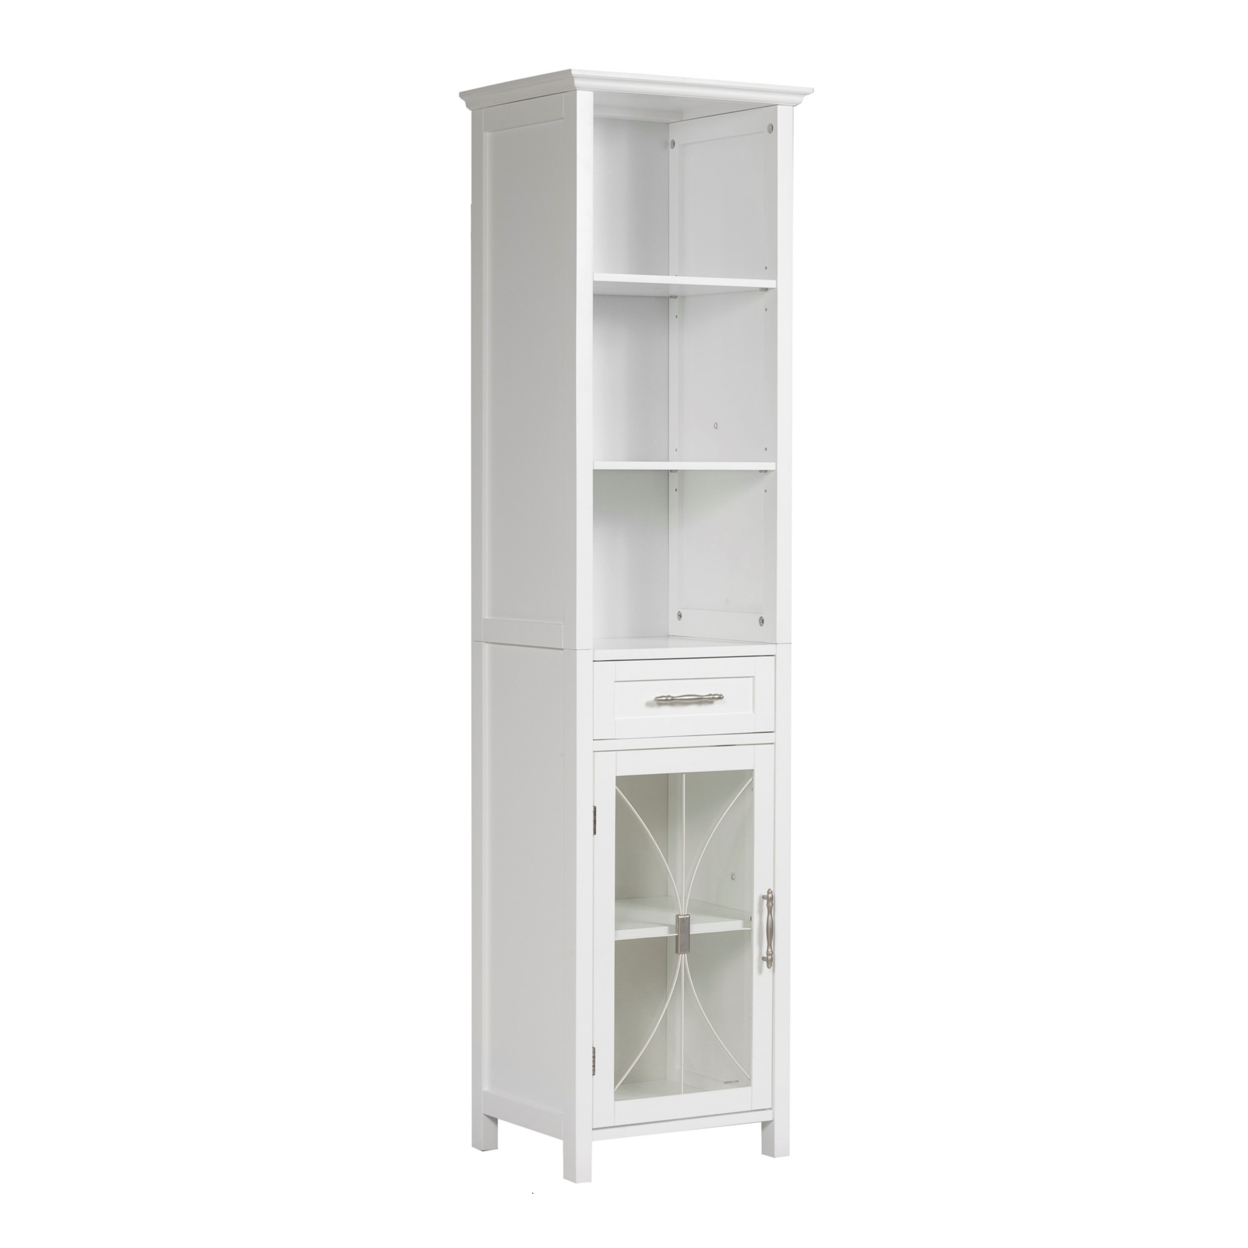 Elegant Home Fashions Wooden Bathroom Cabinet White 7978